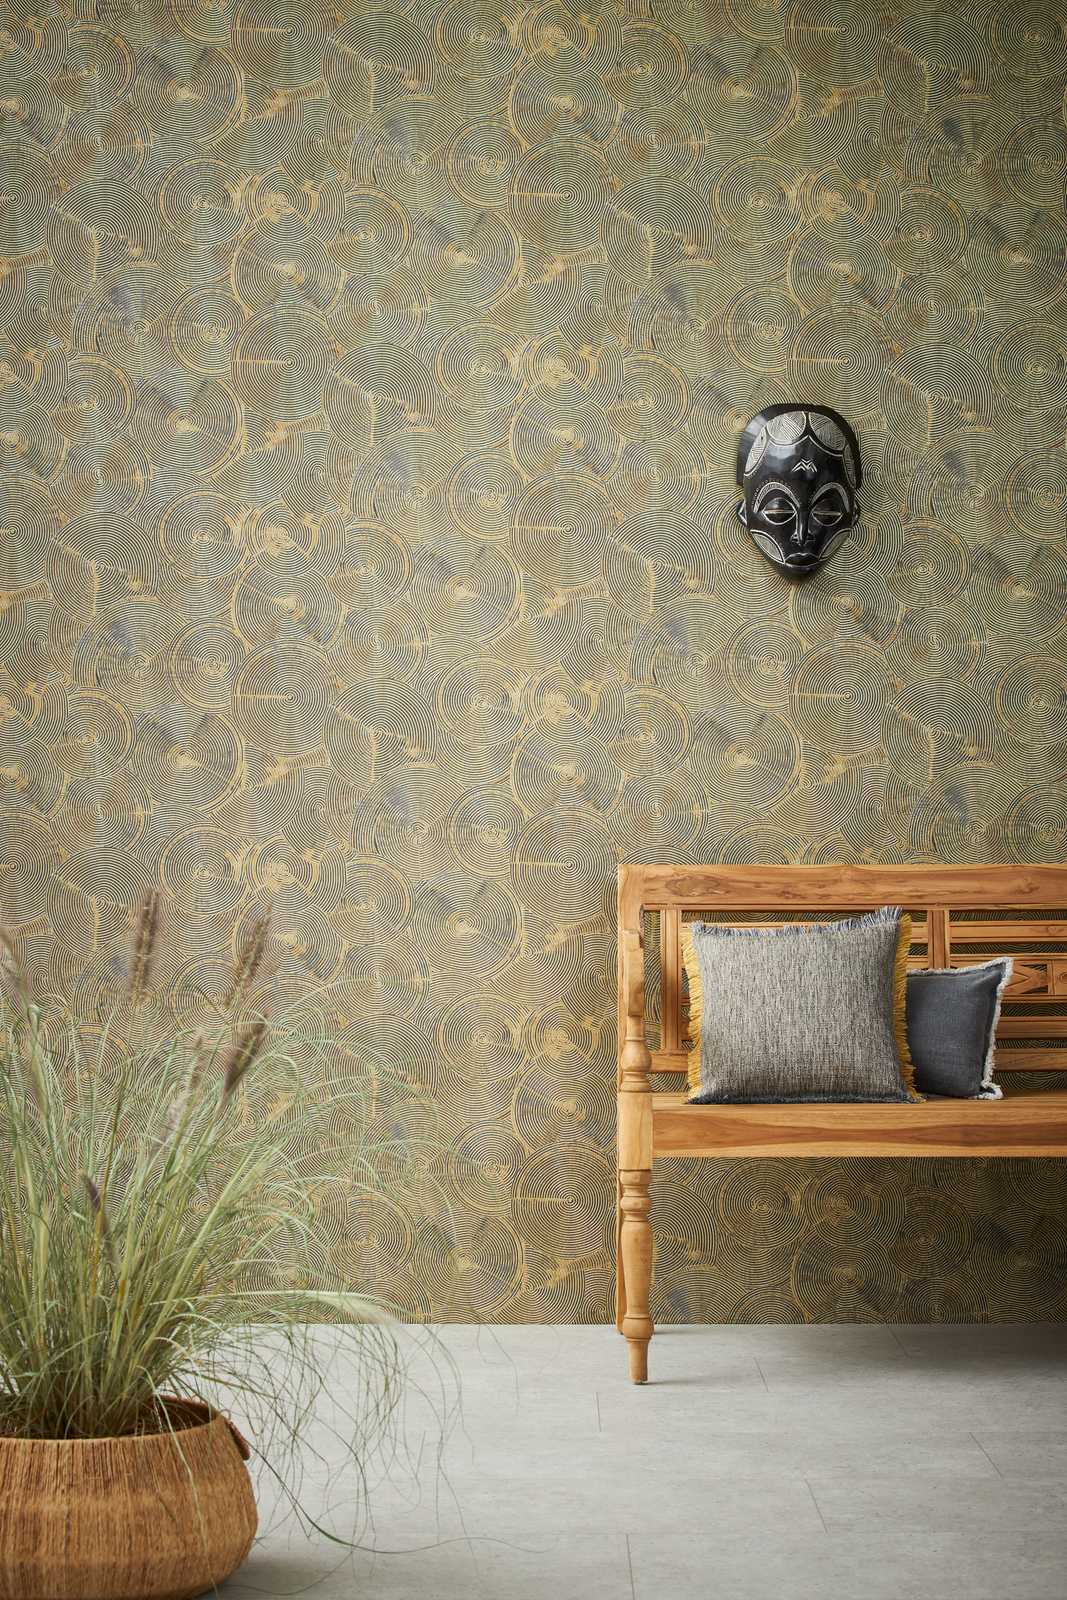             Pattern wallpaper modern plaster look with gold - beige, metallic, black
        